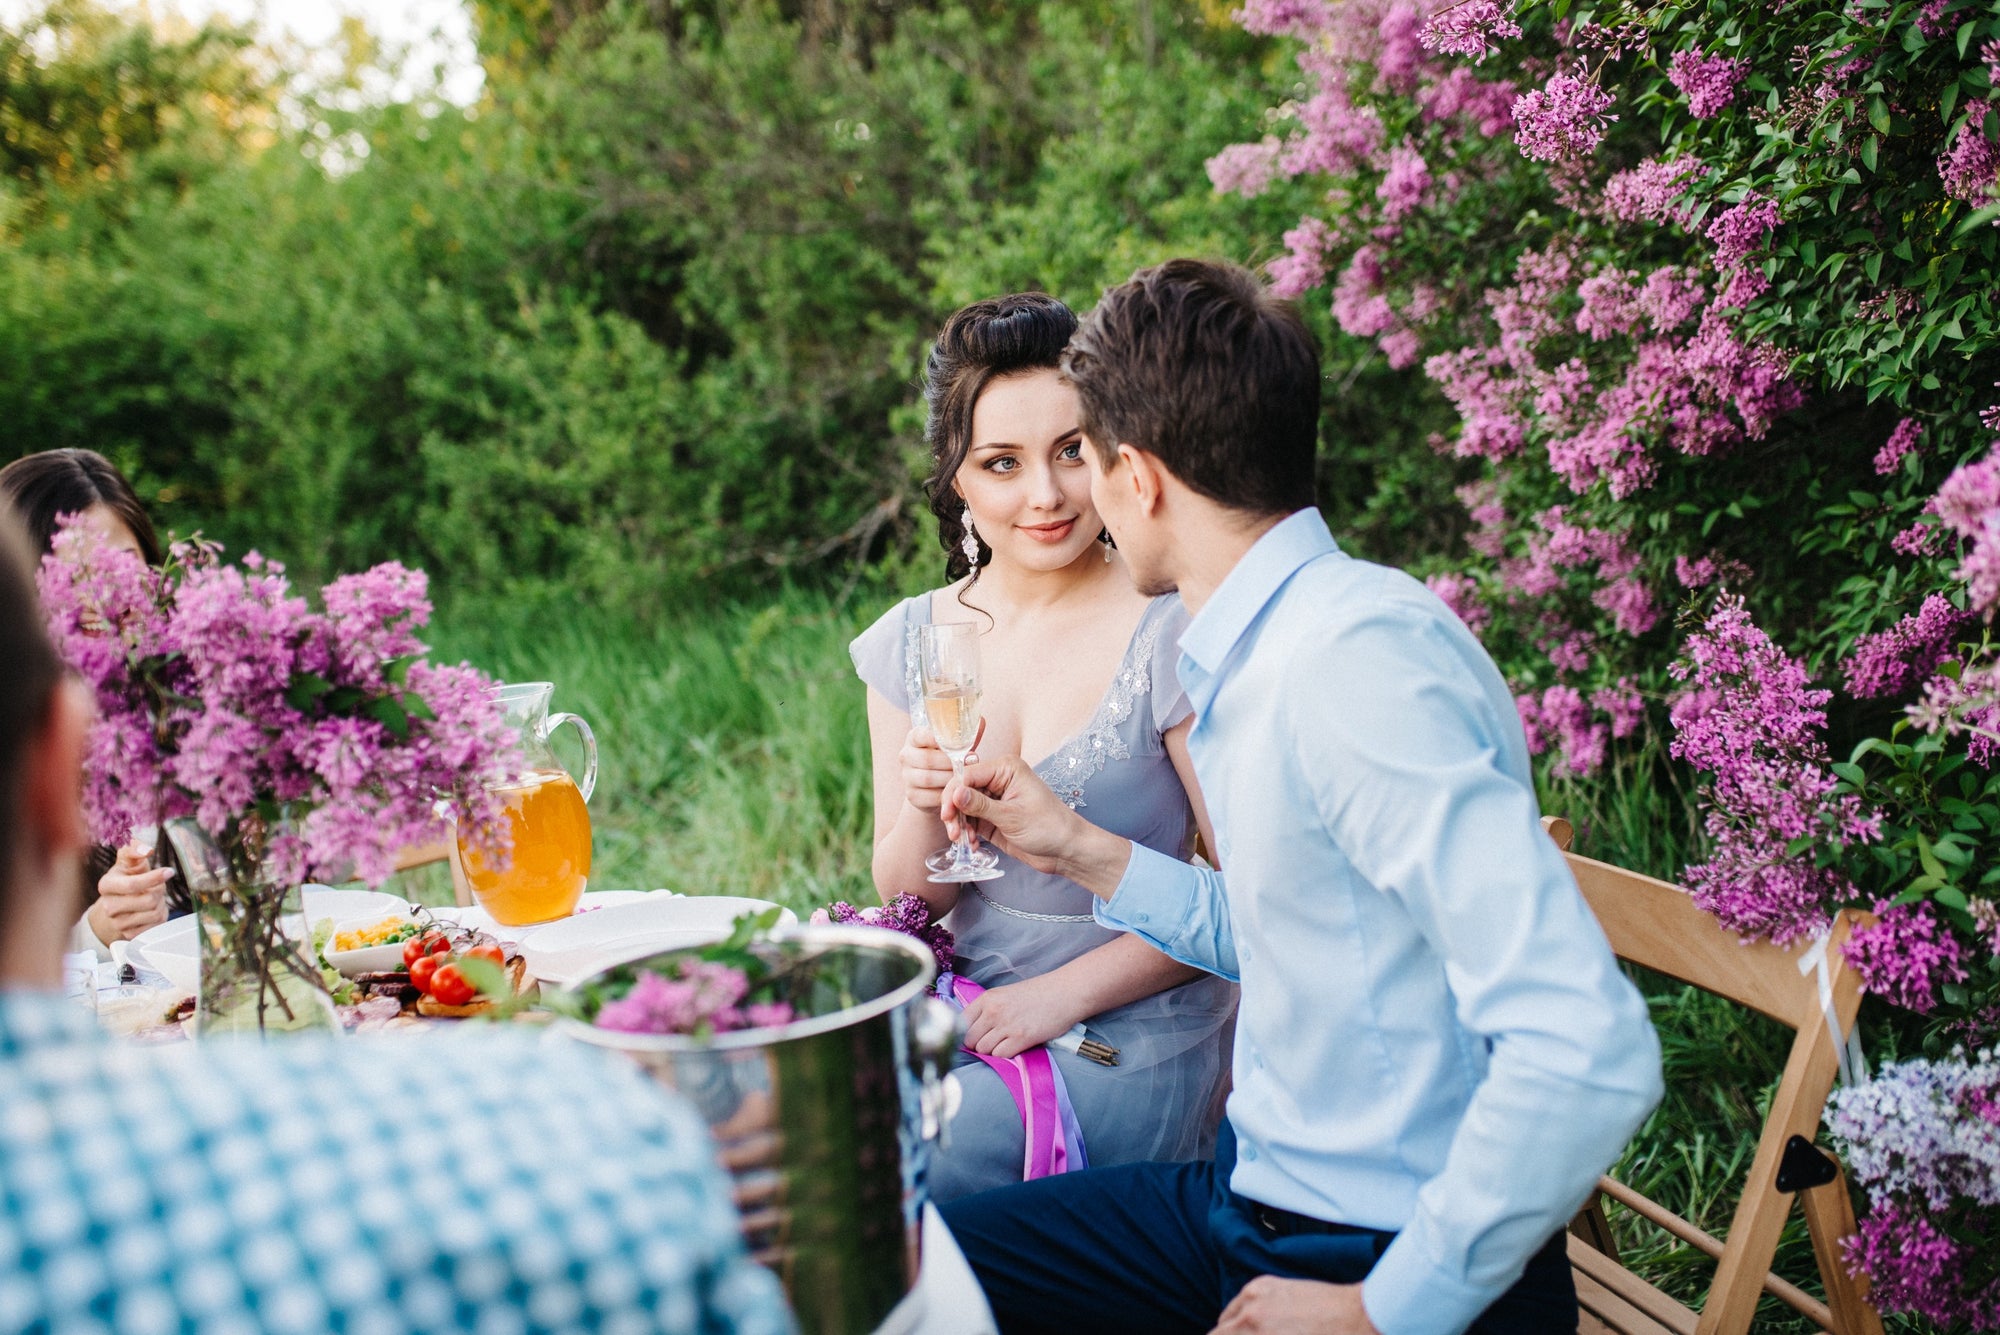 9 Romantic Summer Date Ideas: Bring On The Heat